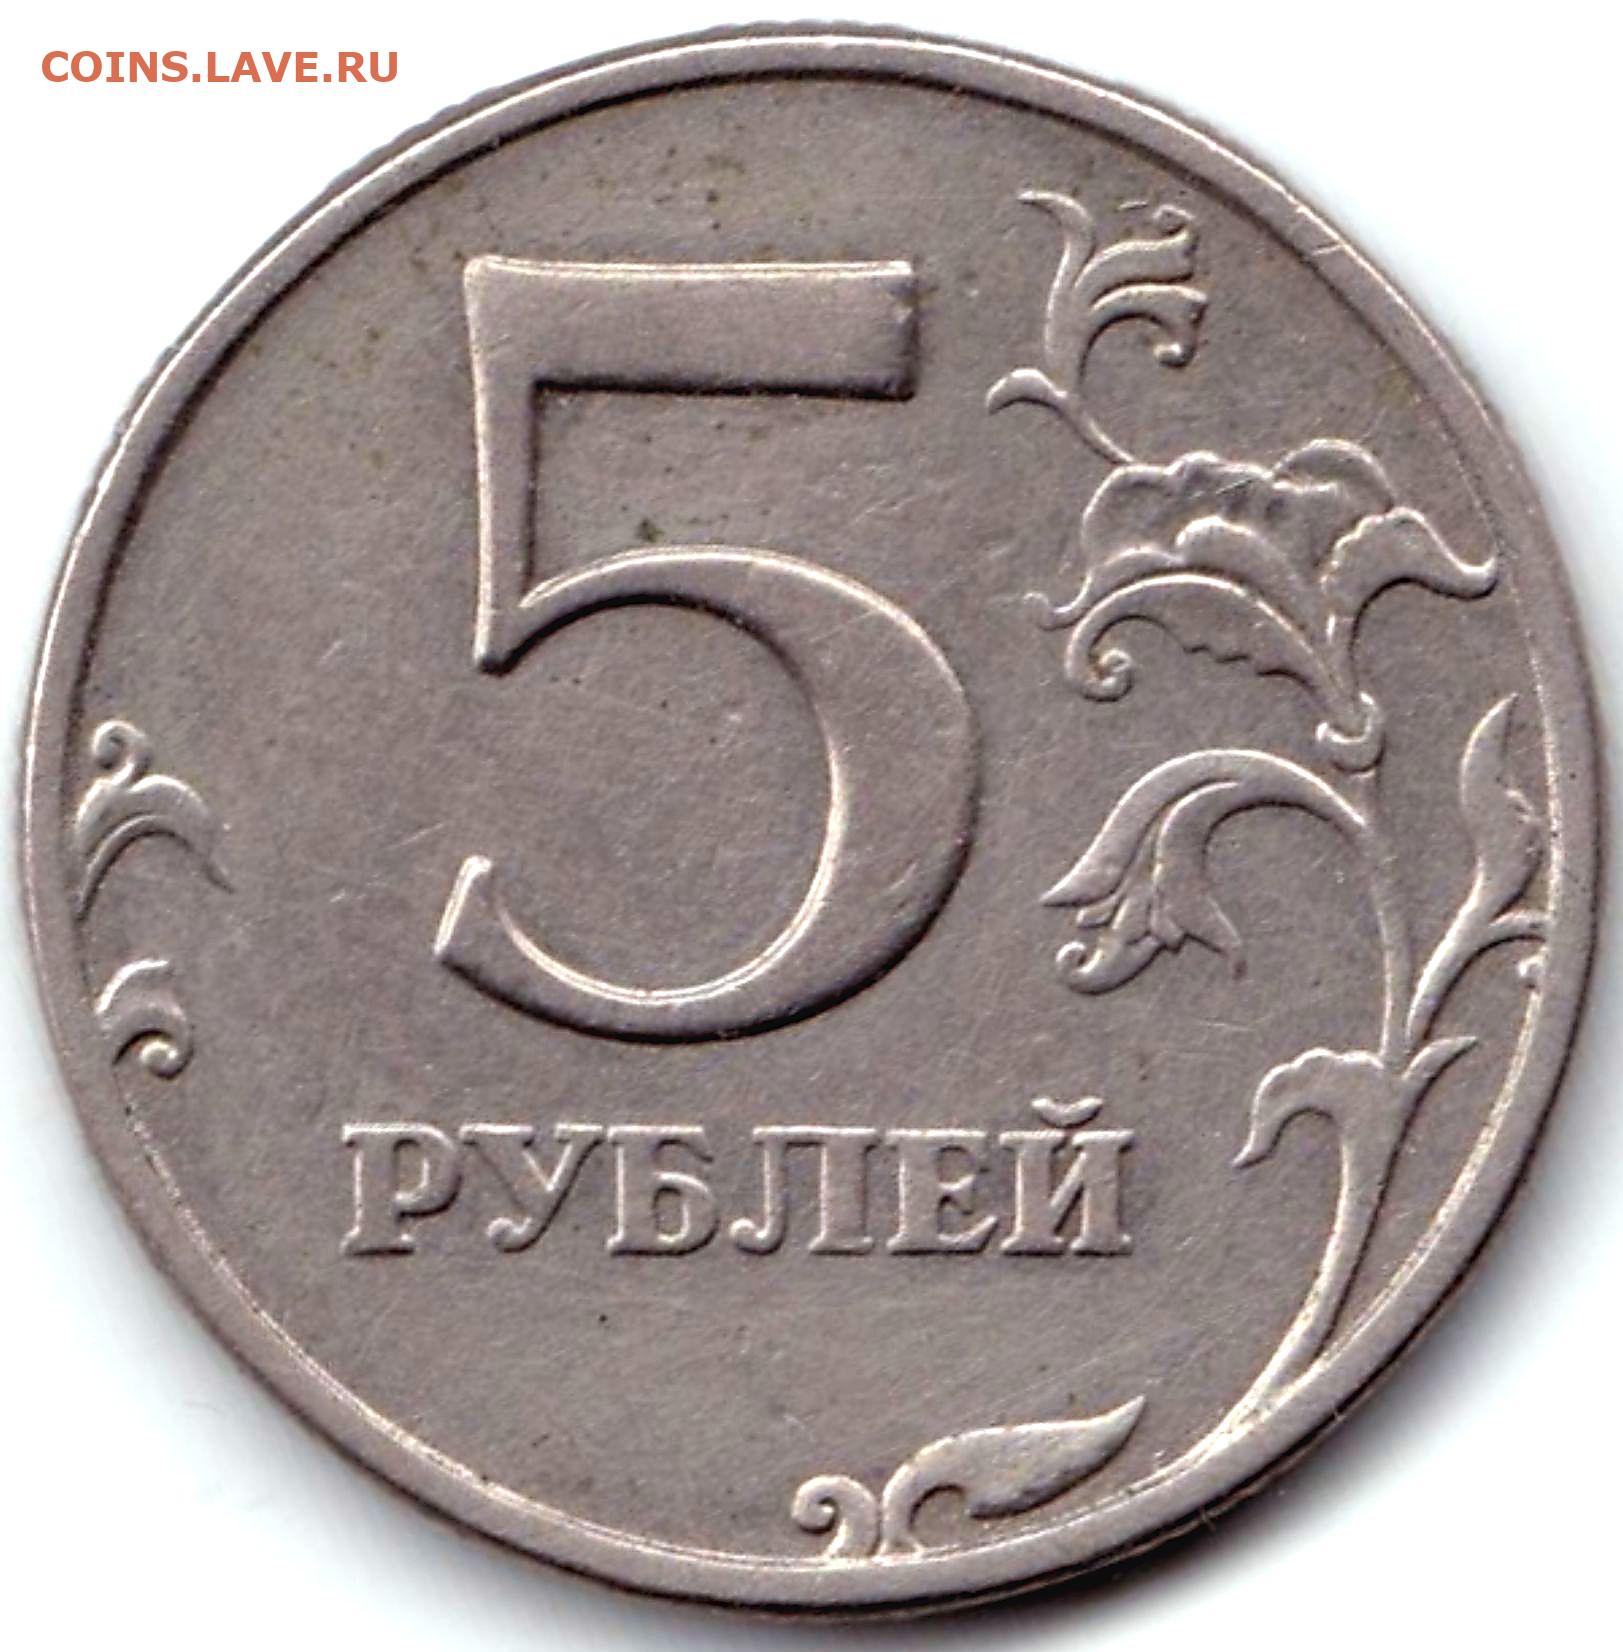 Авито купить 5 рублей. 5 Рублей 2015 ММД. 5 Рублей 1997 ММД брак штампа Канта. Монета 5 рублей. Монетка 5 рублей.